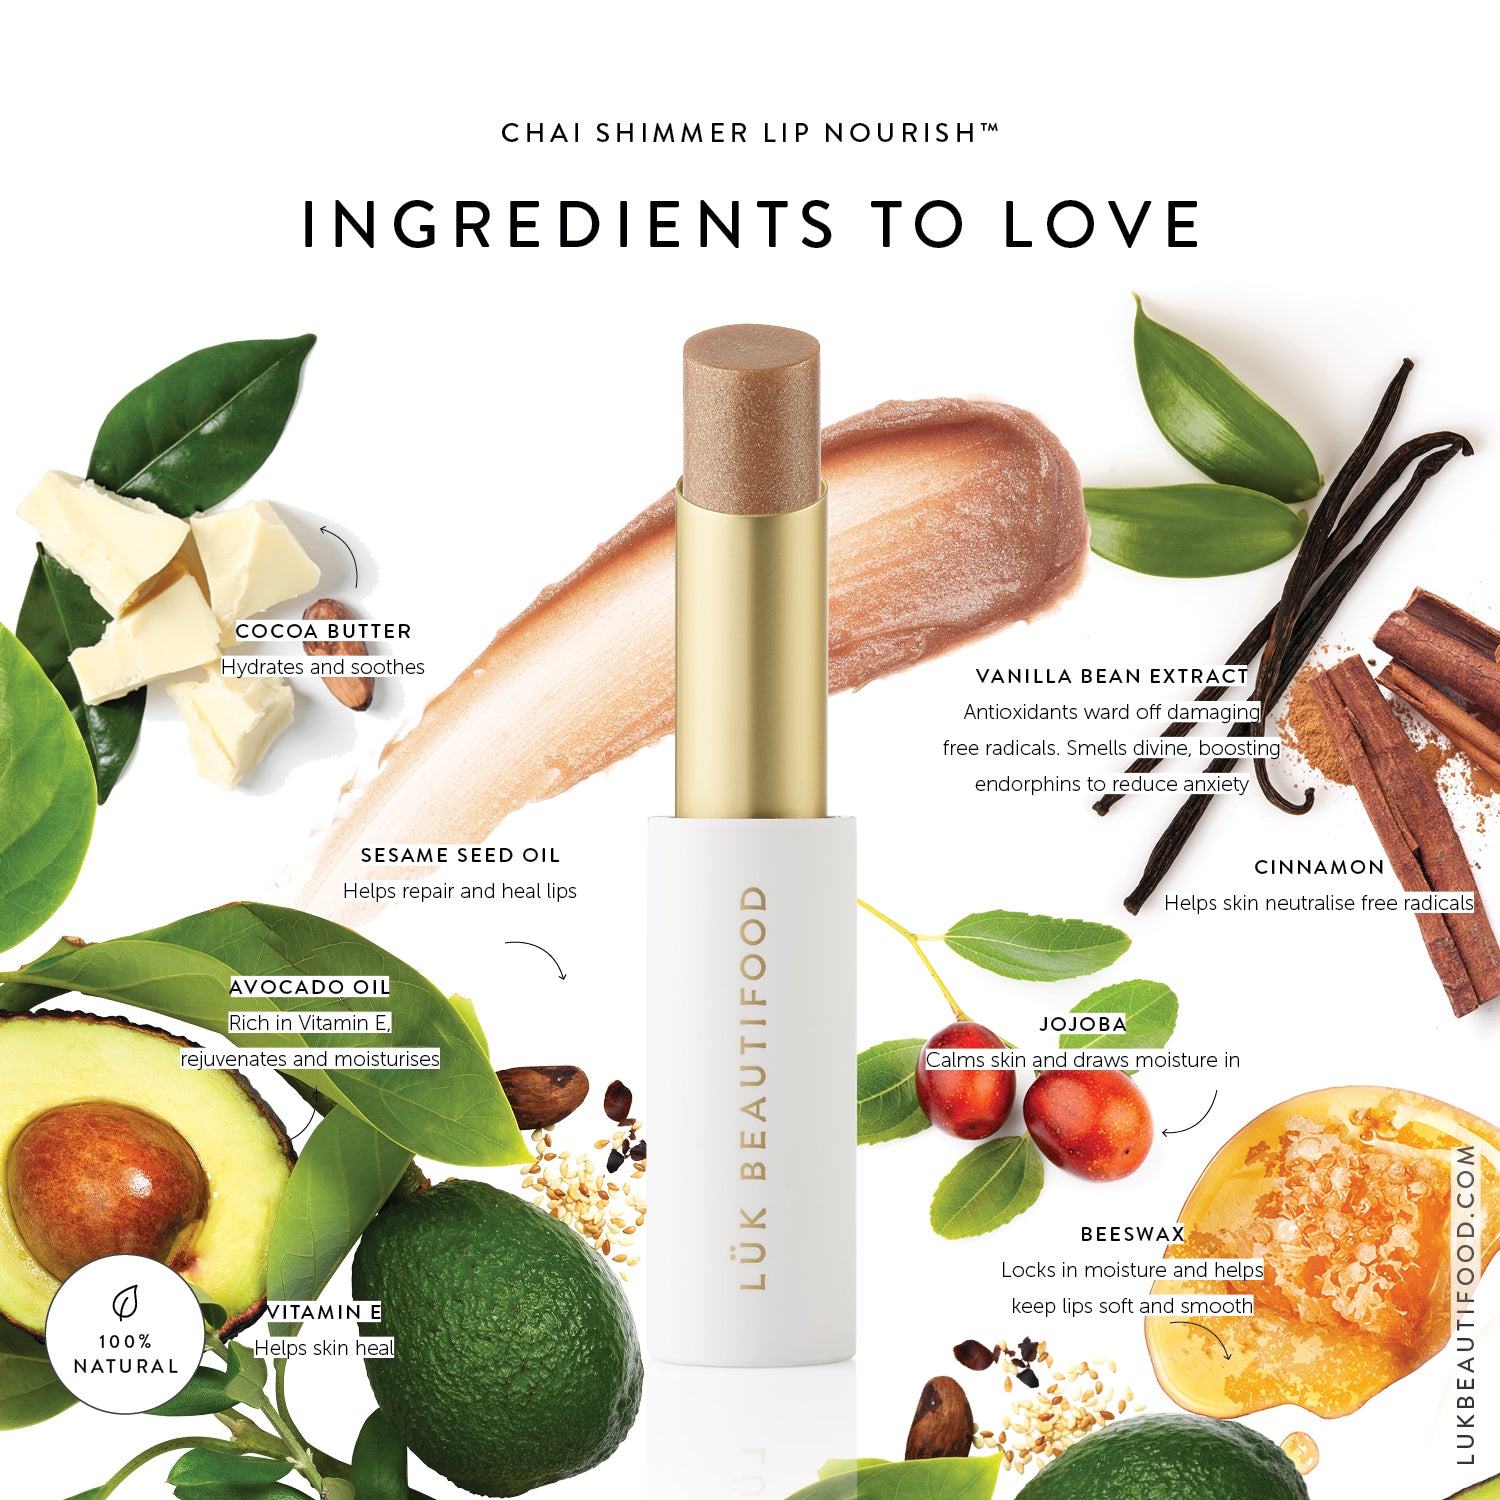 Lip Nourish Chai Shimmer - Ingredients to love. 100% Natural Lipstick